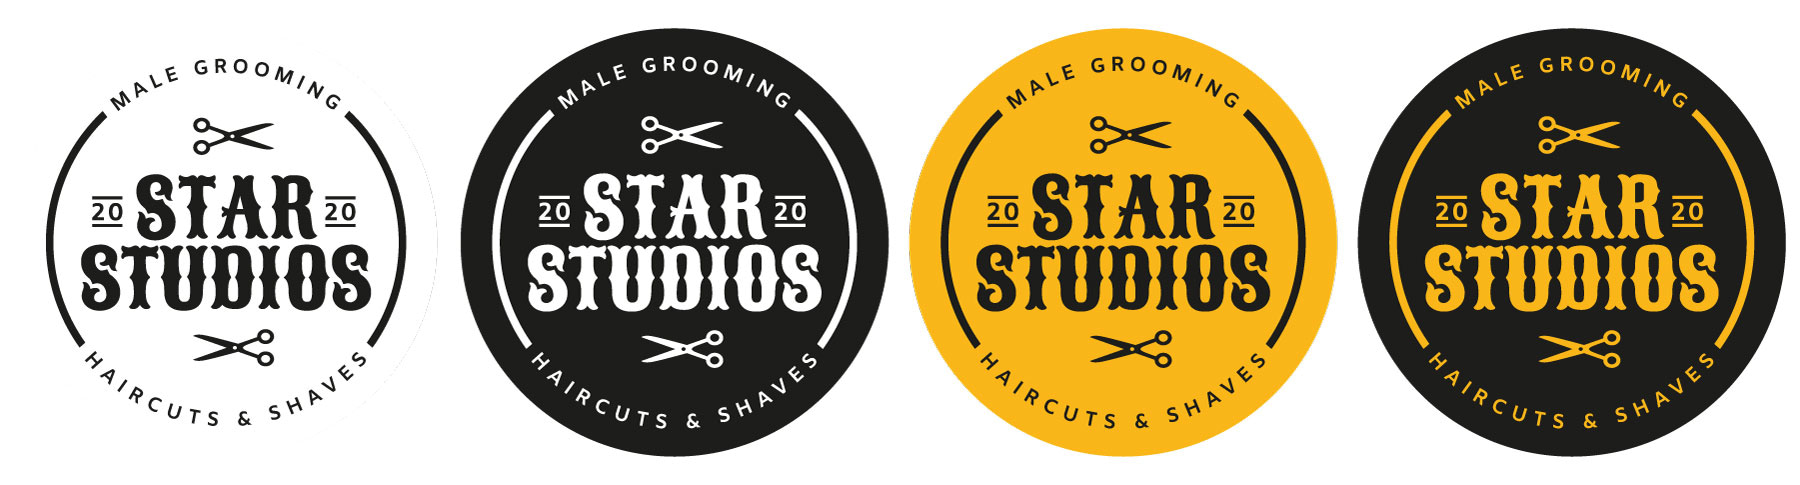 star studios logos grid